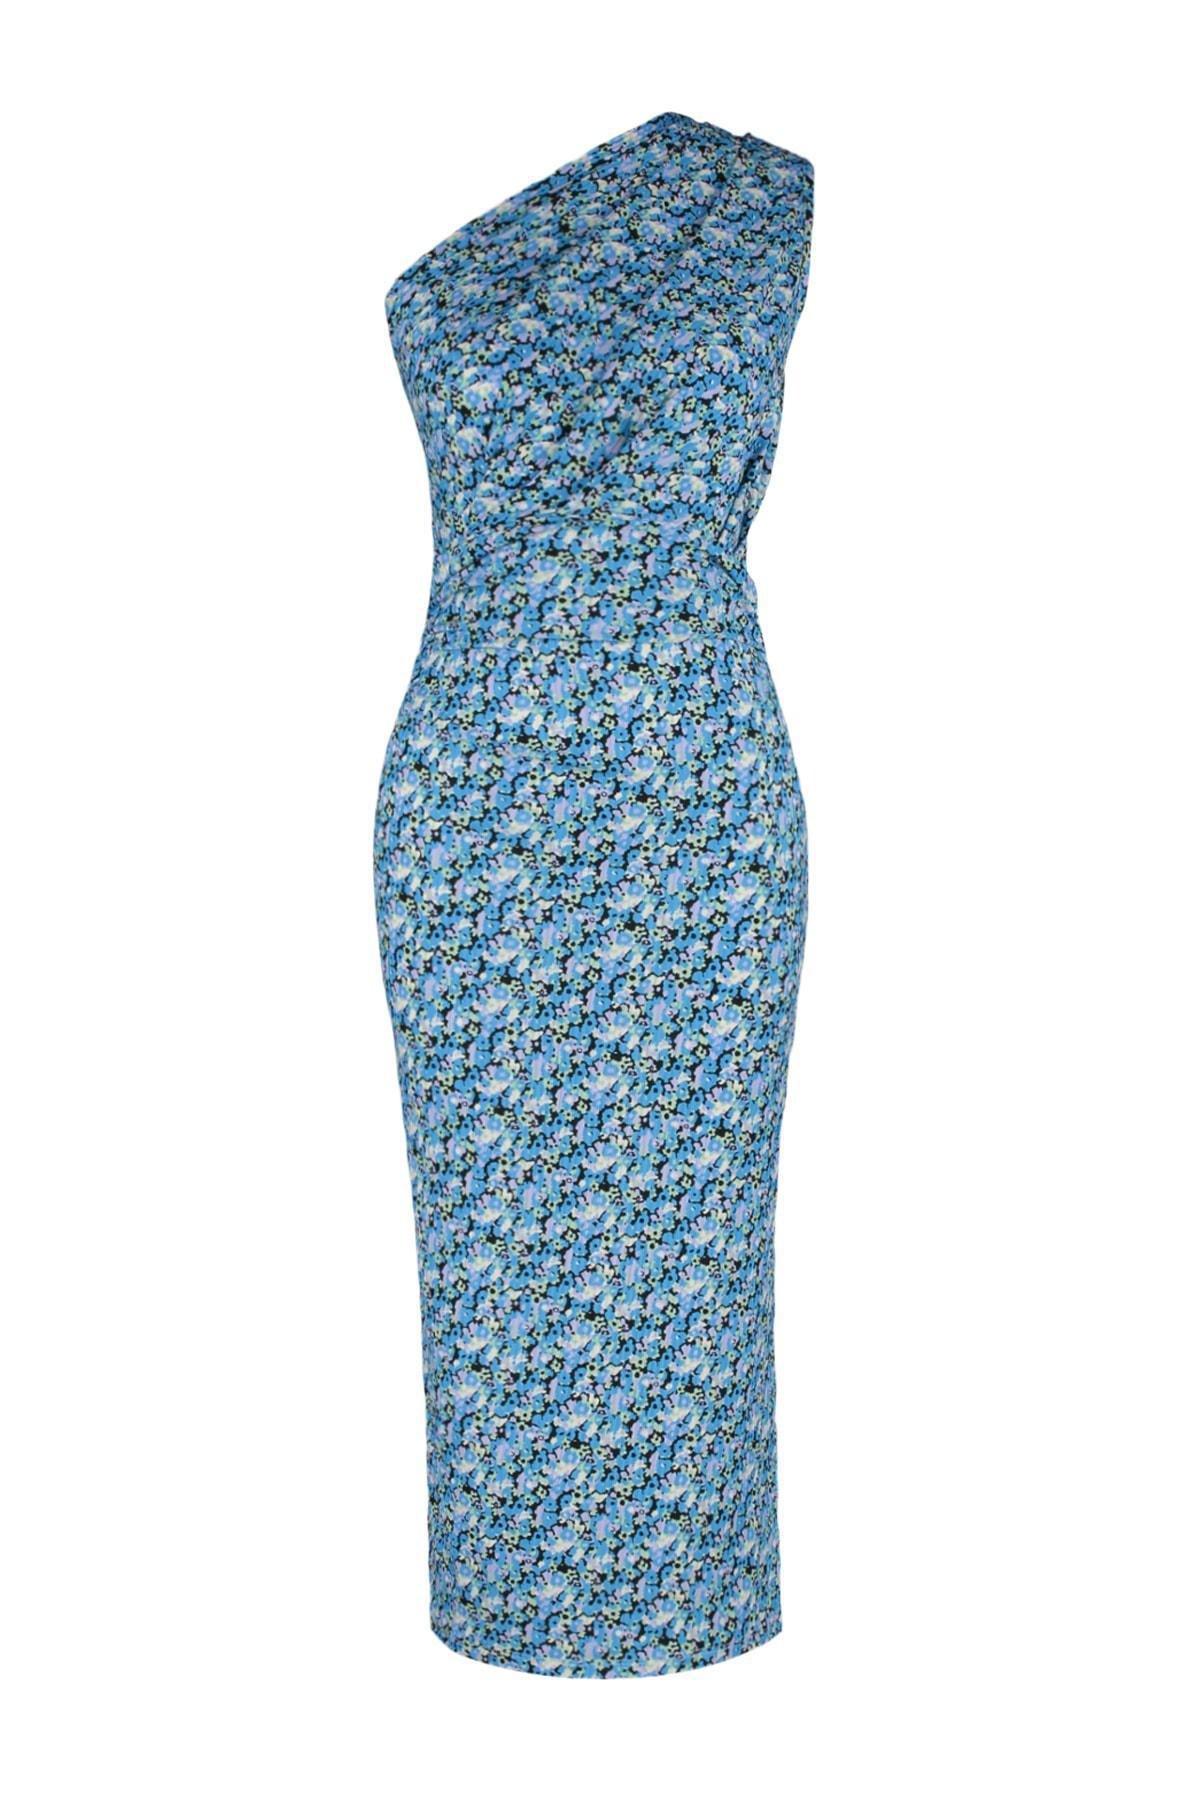 Trendyol - Blue Floral Bodycon Dress